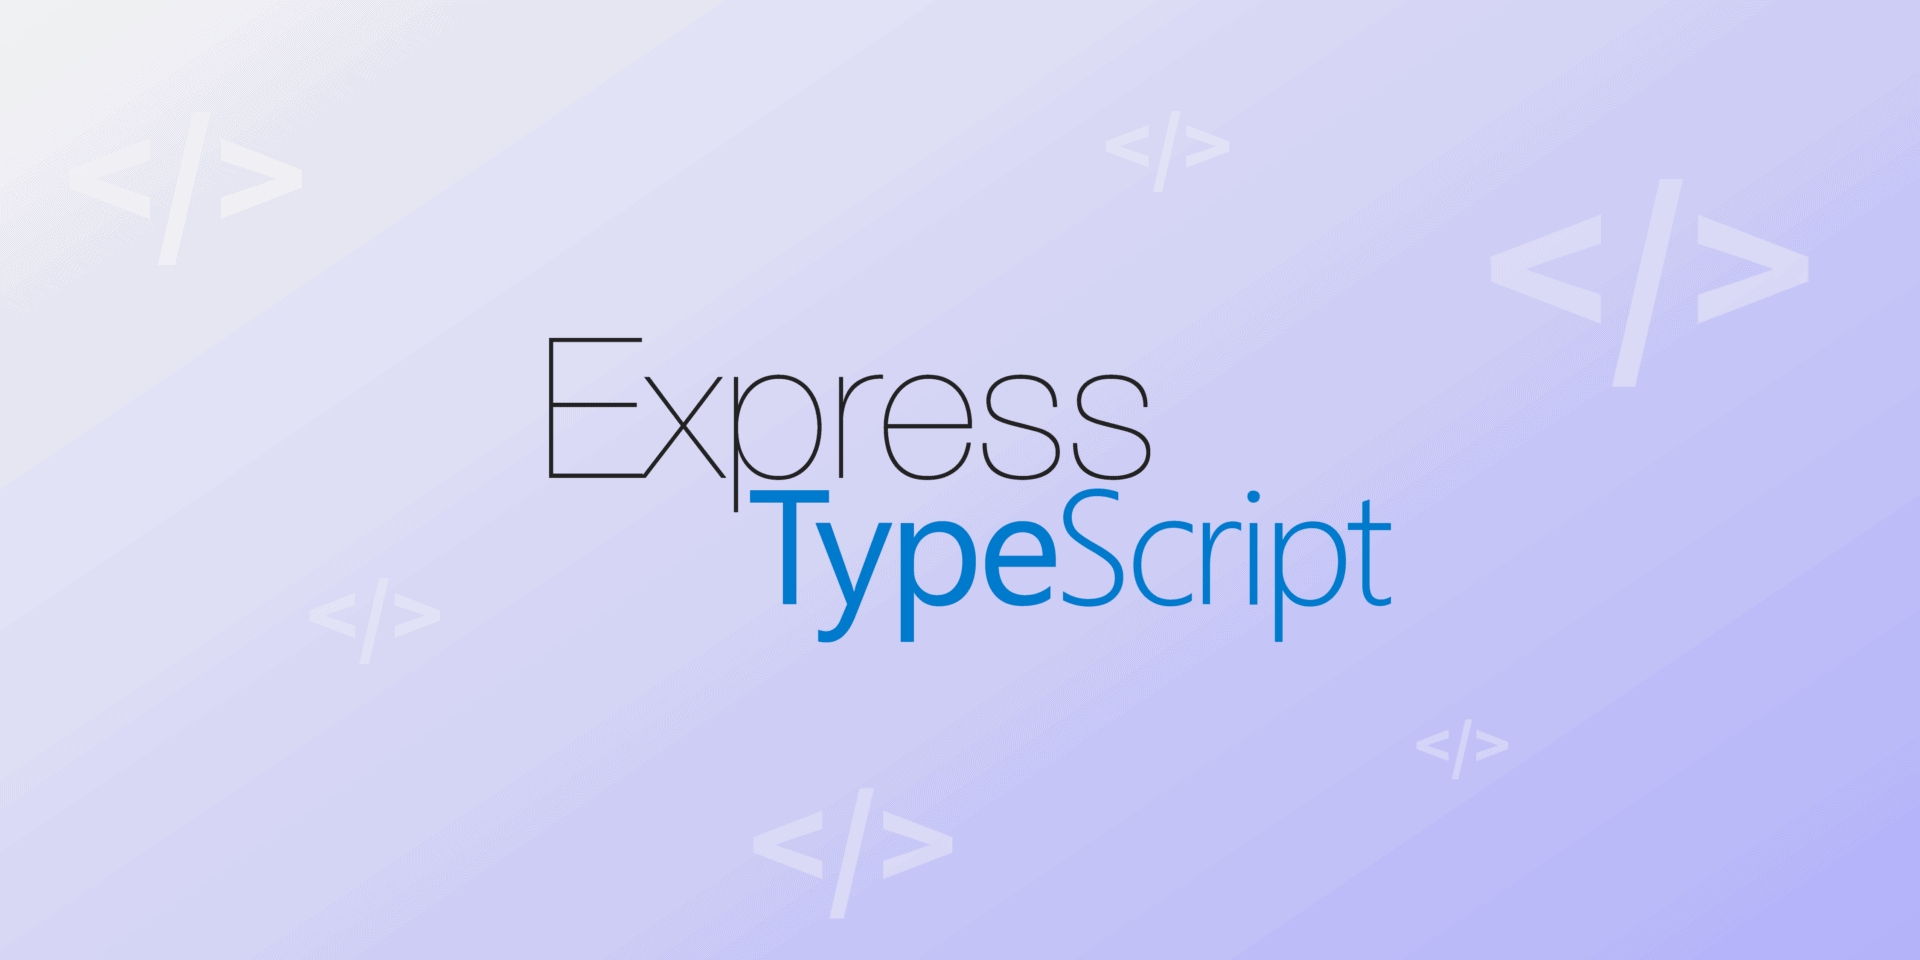 TypeScript tutorials